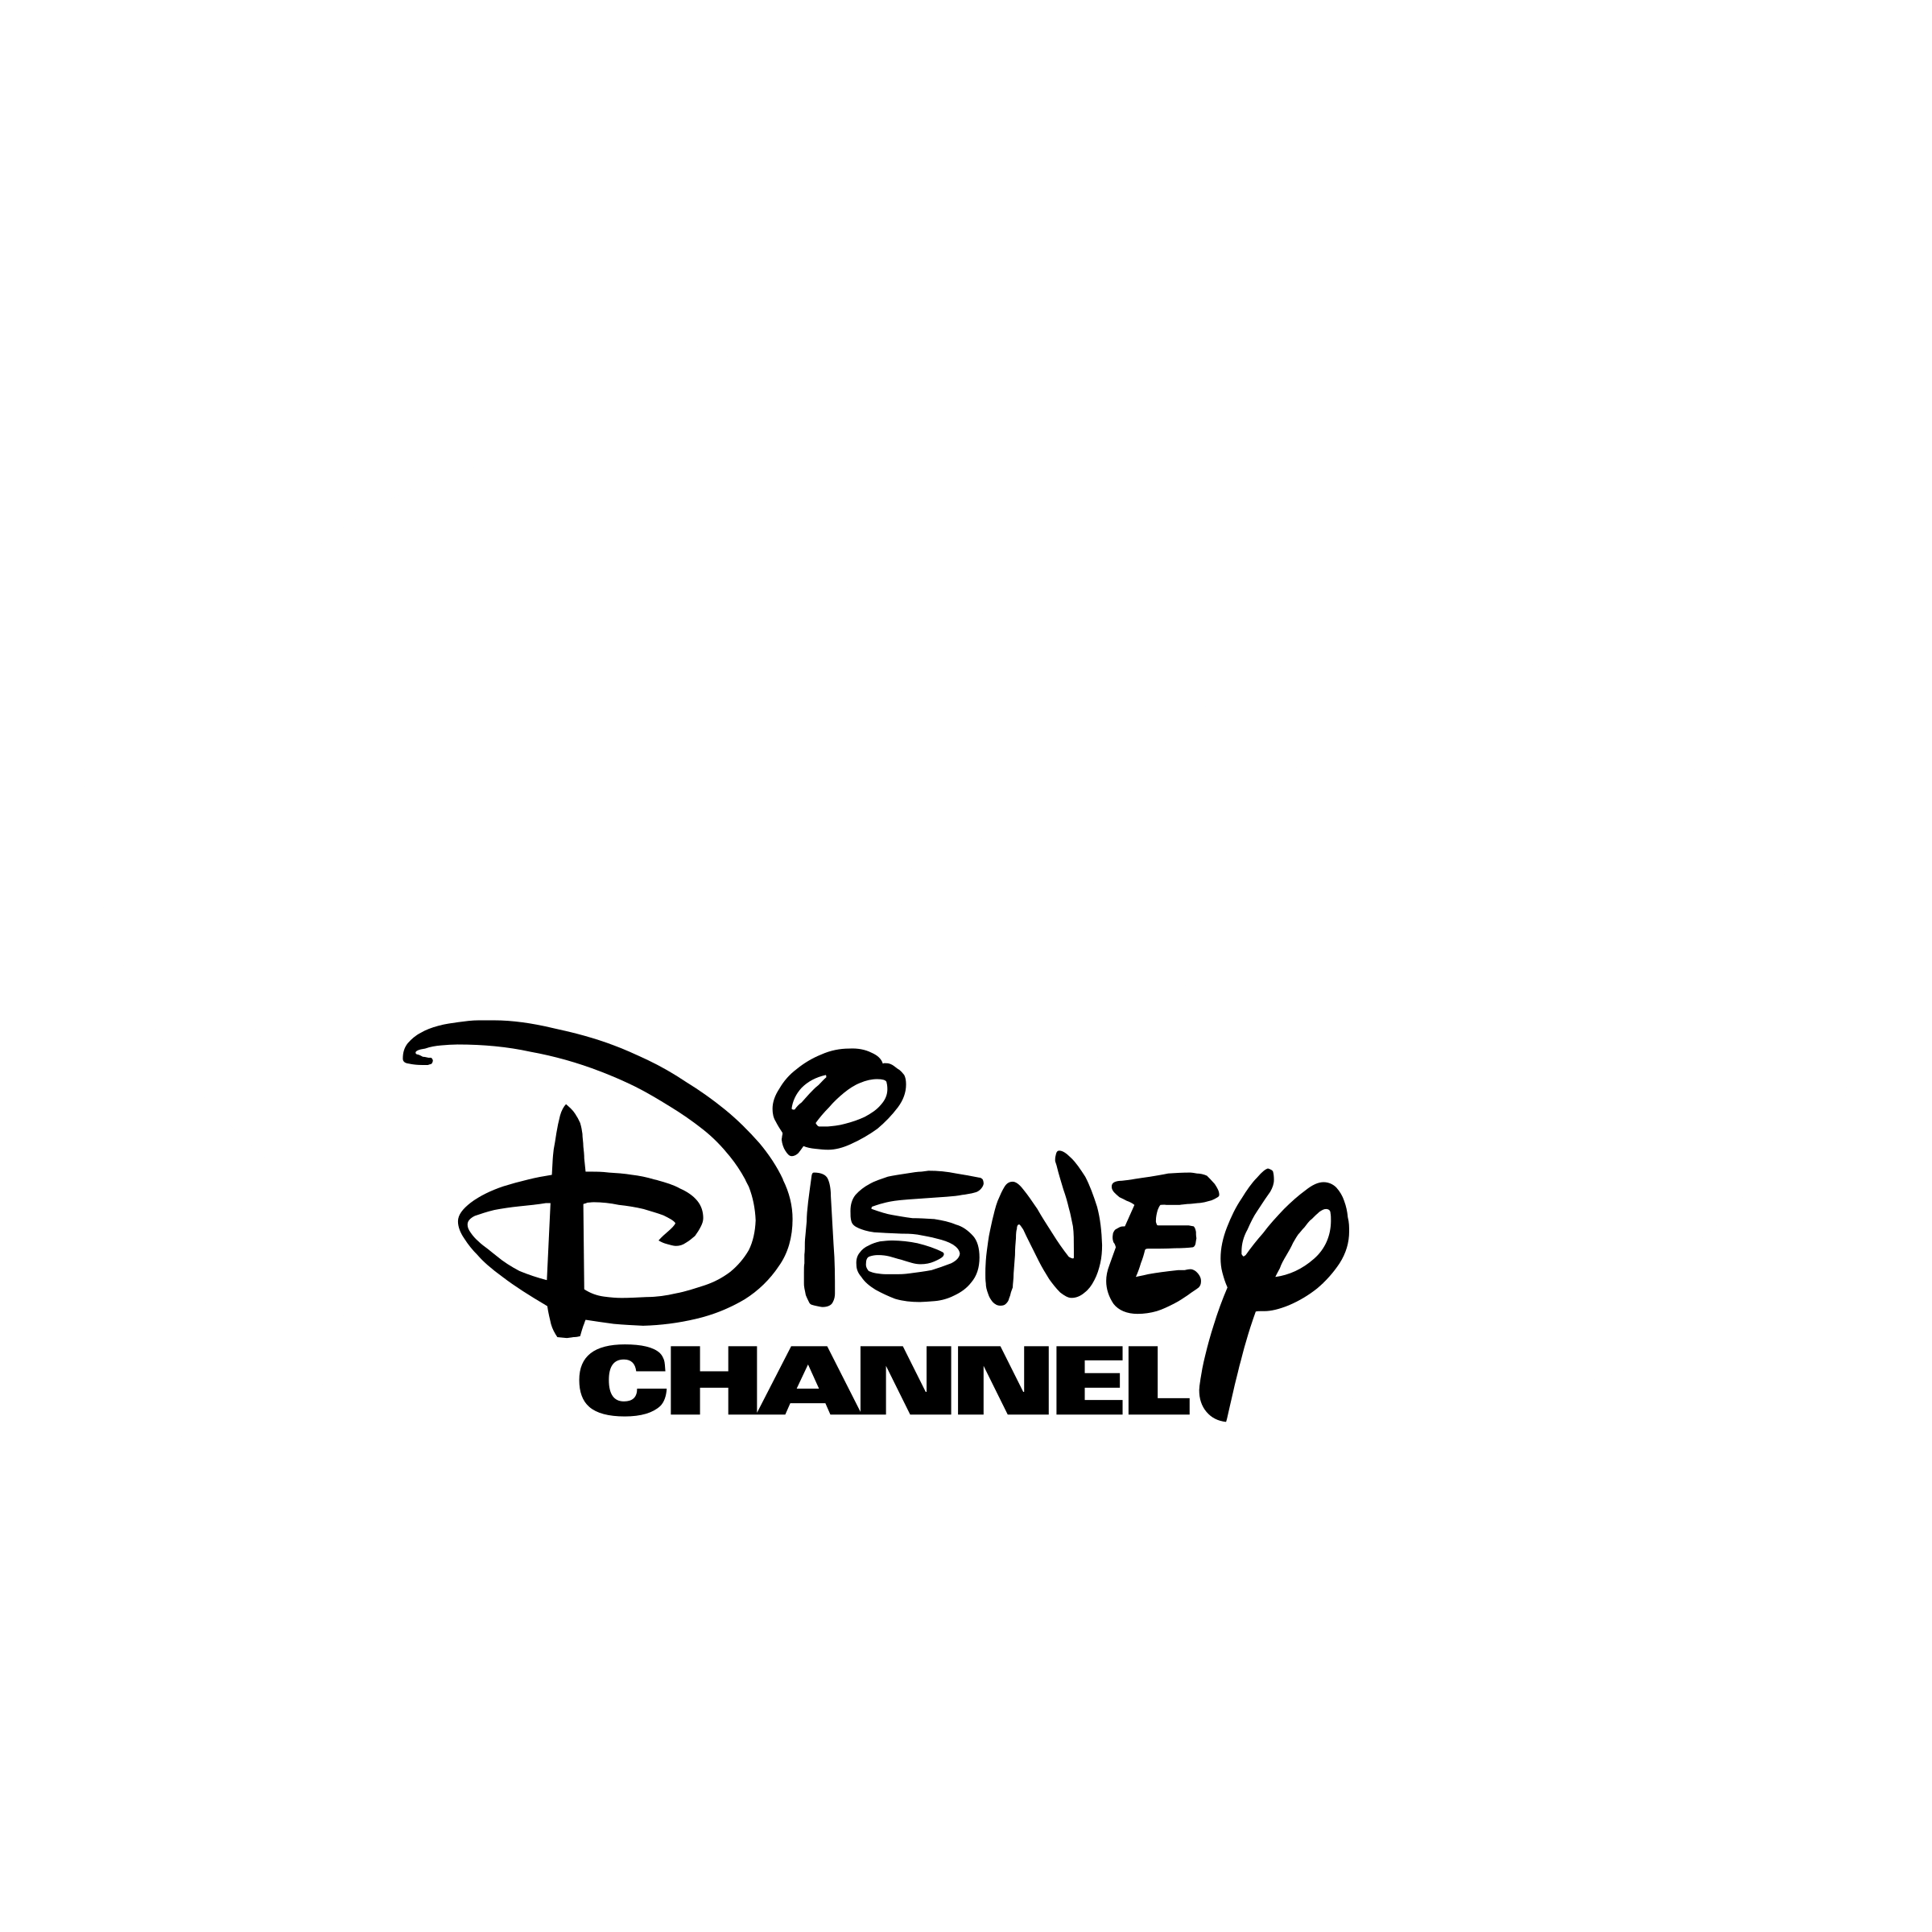 Disney.com Logo - Disney Channel Logo PNG Transparent & SVG Vector - Freebie Supply